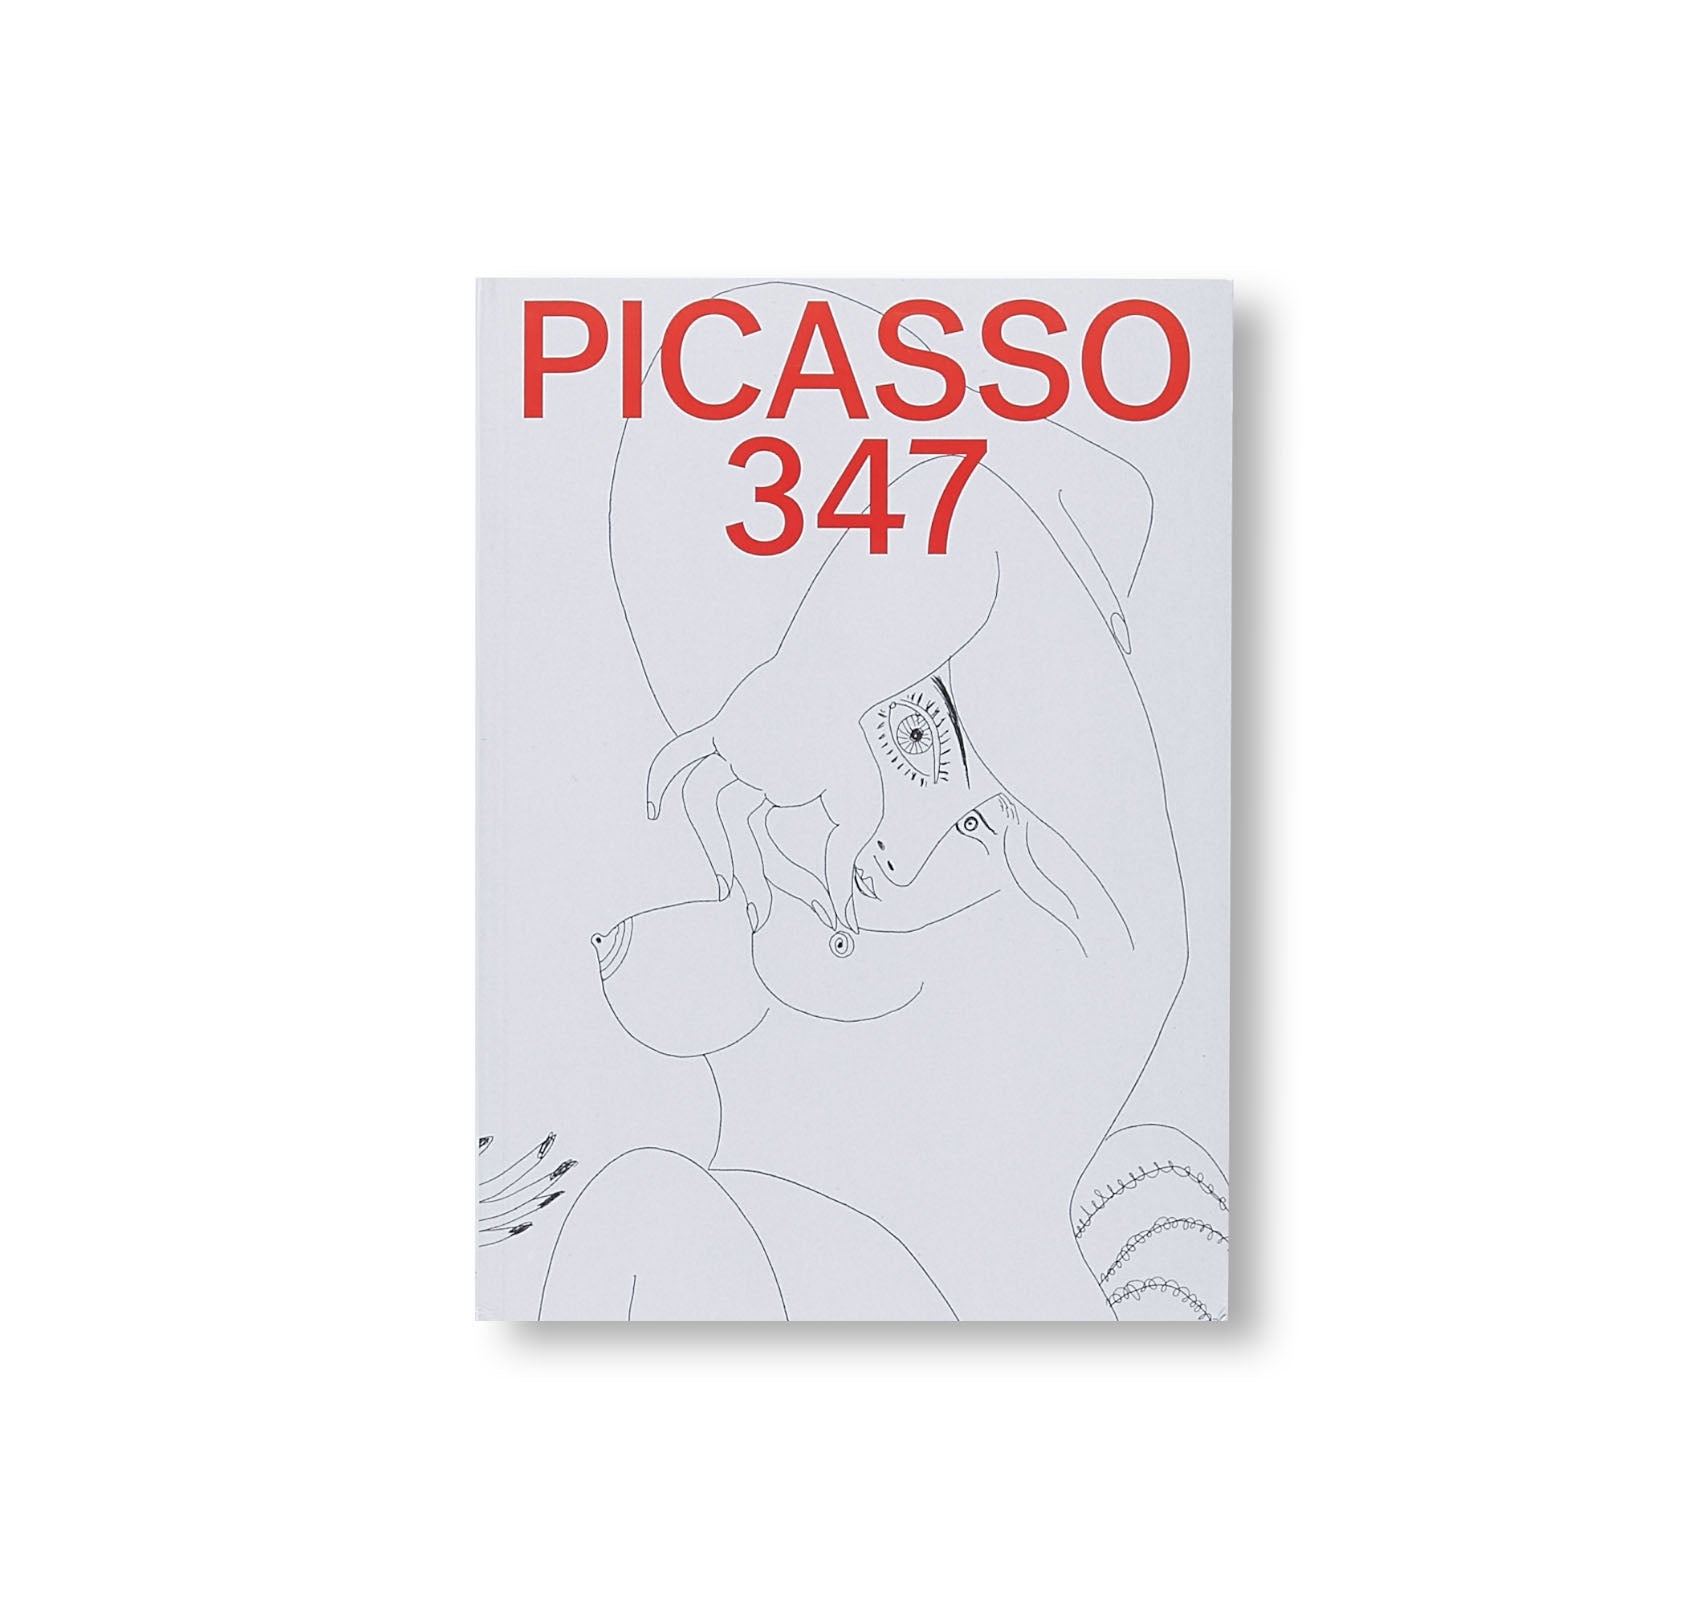 PICASSO 347 by Pablo Picasso – twelvebooks